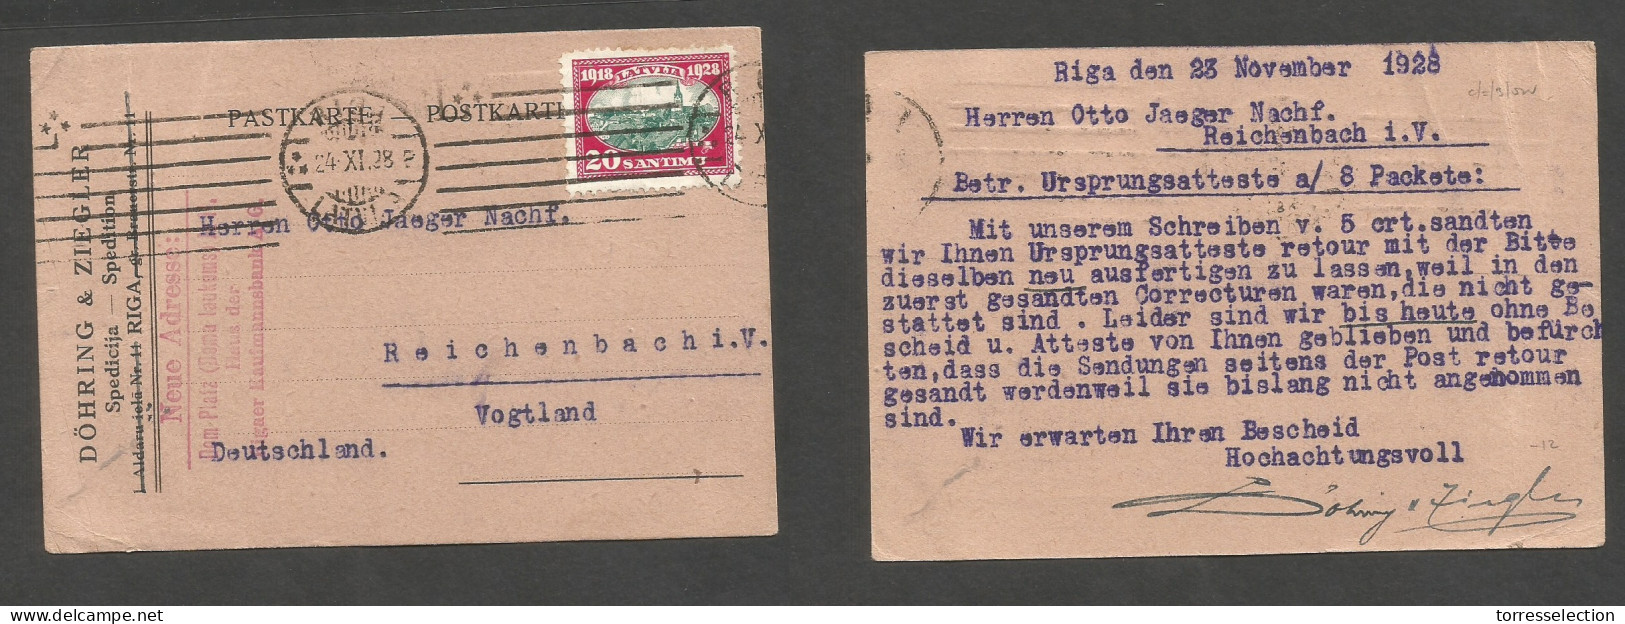 LATVIA. 1928 (24 Nov) Riga - Germany, Vogtland. Fkd Card, Rolling Cachet, Comercial. XSALE. - Latvia